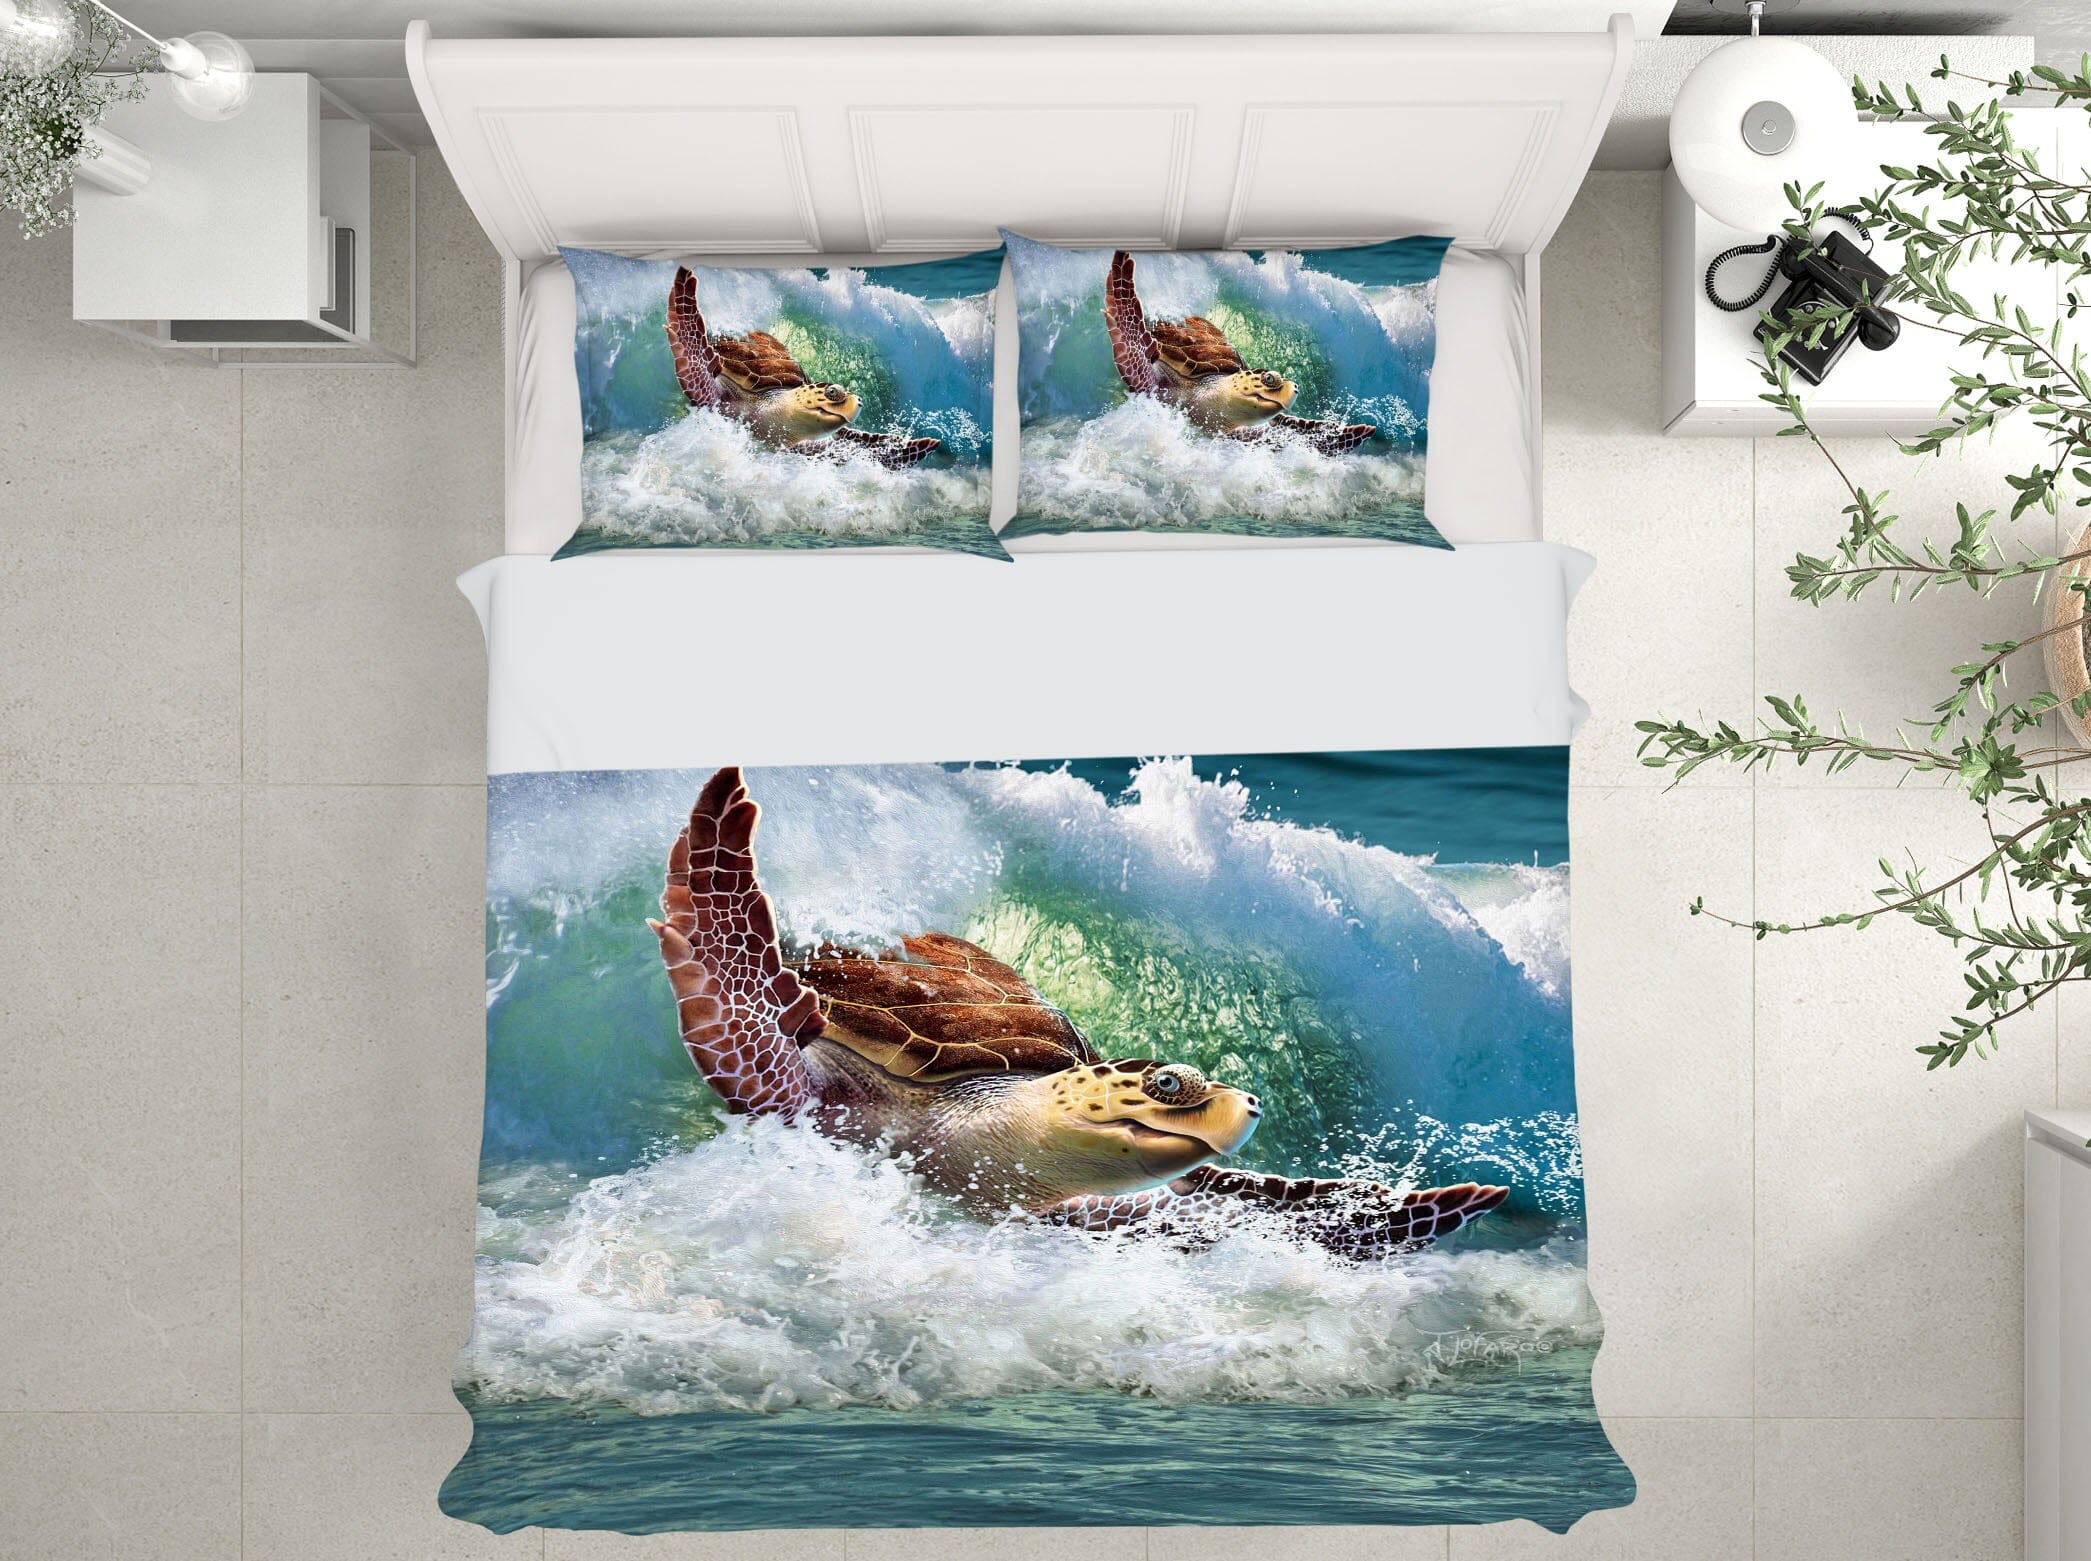 3D SeaTurtle 2108 Jerry LoFaro bedding Bed Pillowcases Quilt Quiet Covers AJ Creativity Home 